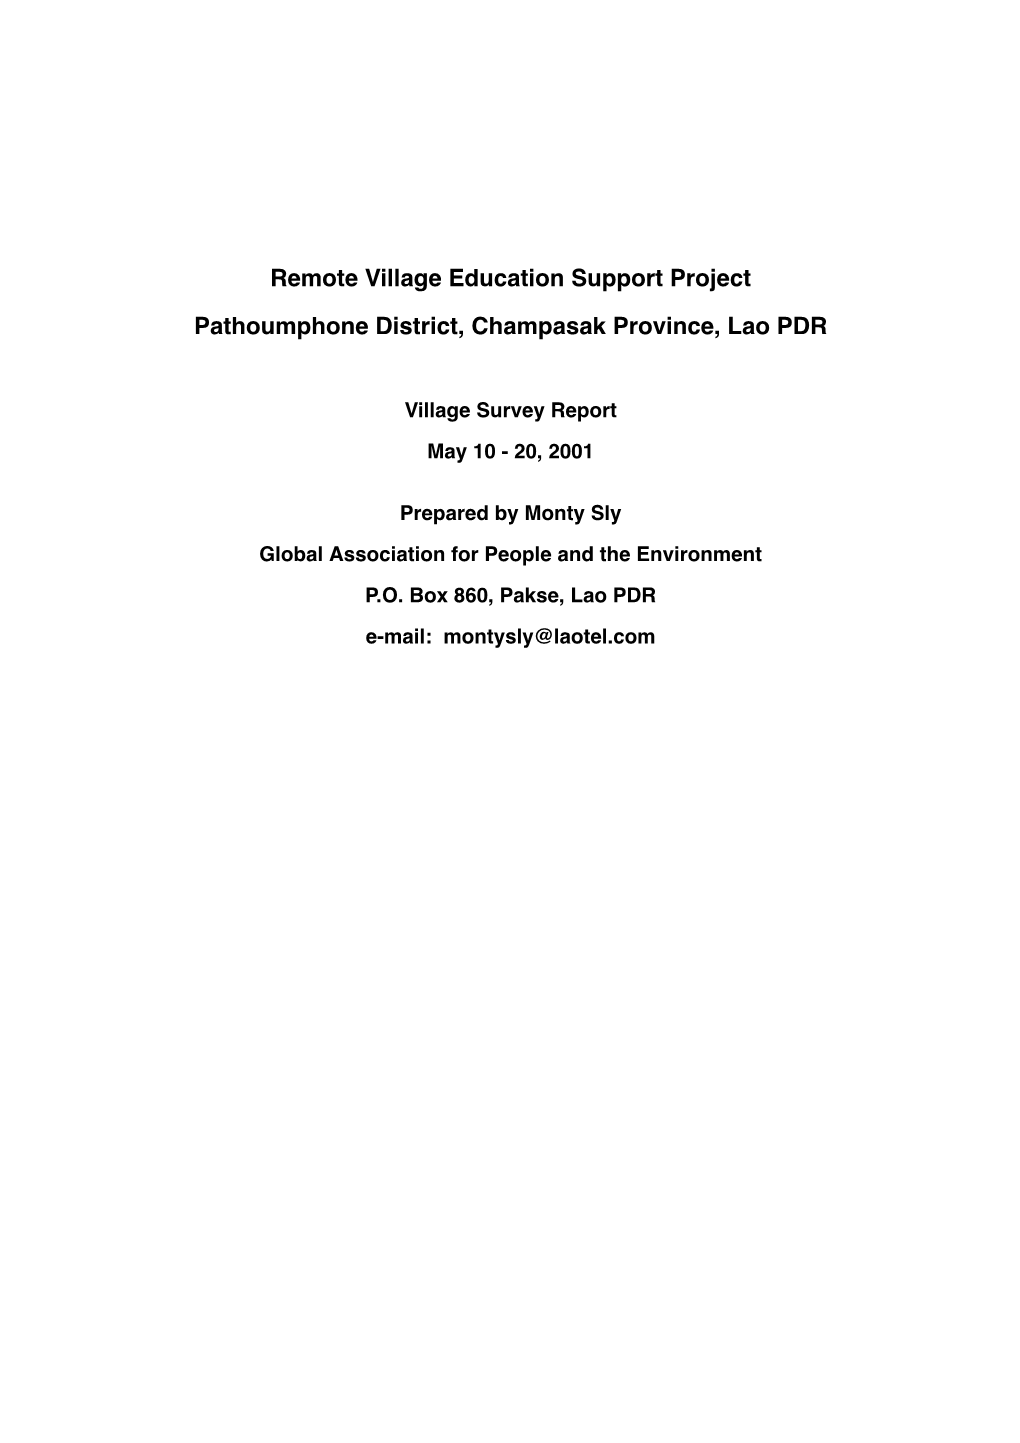 Remote Village Education Support Project, Pathoumphone District